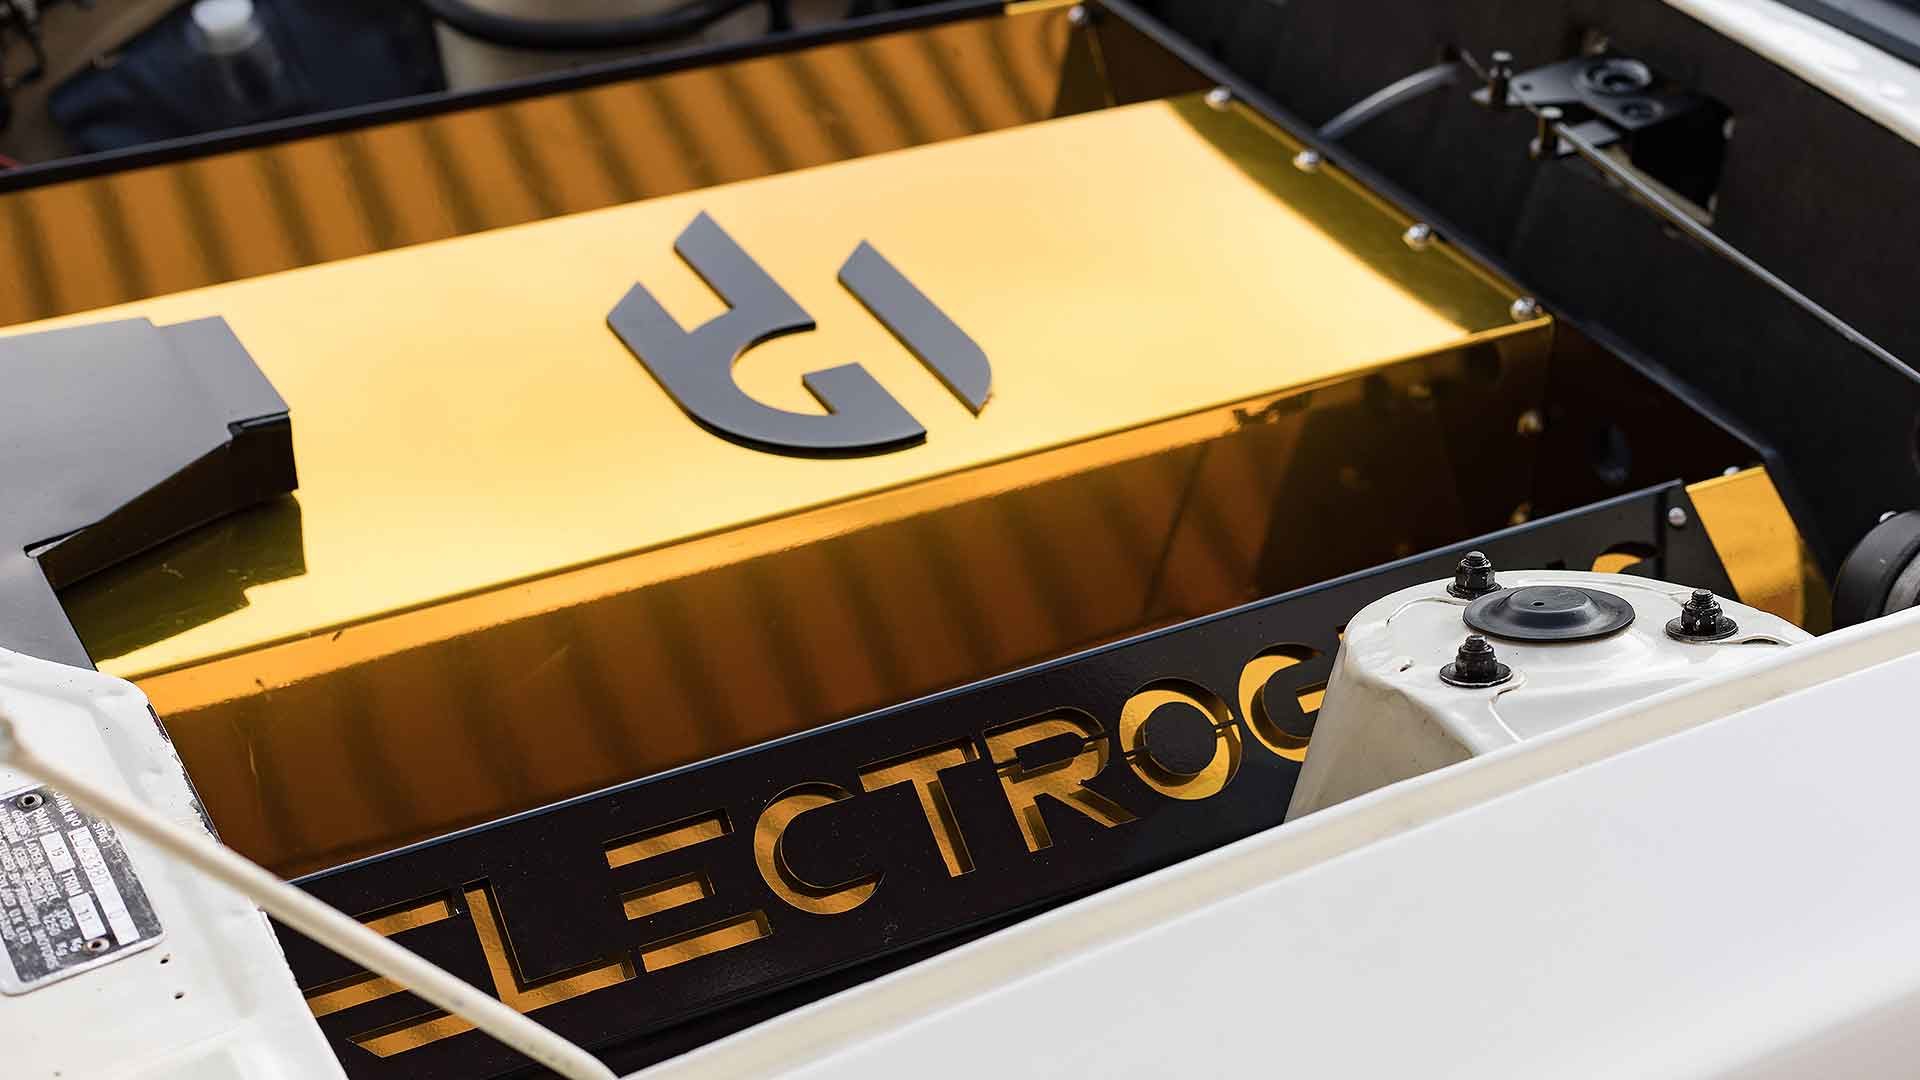 Electric Triumph Stag battery box